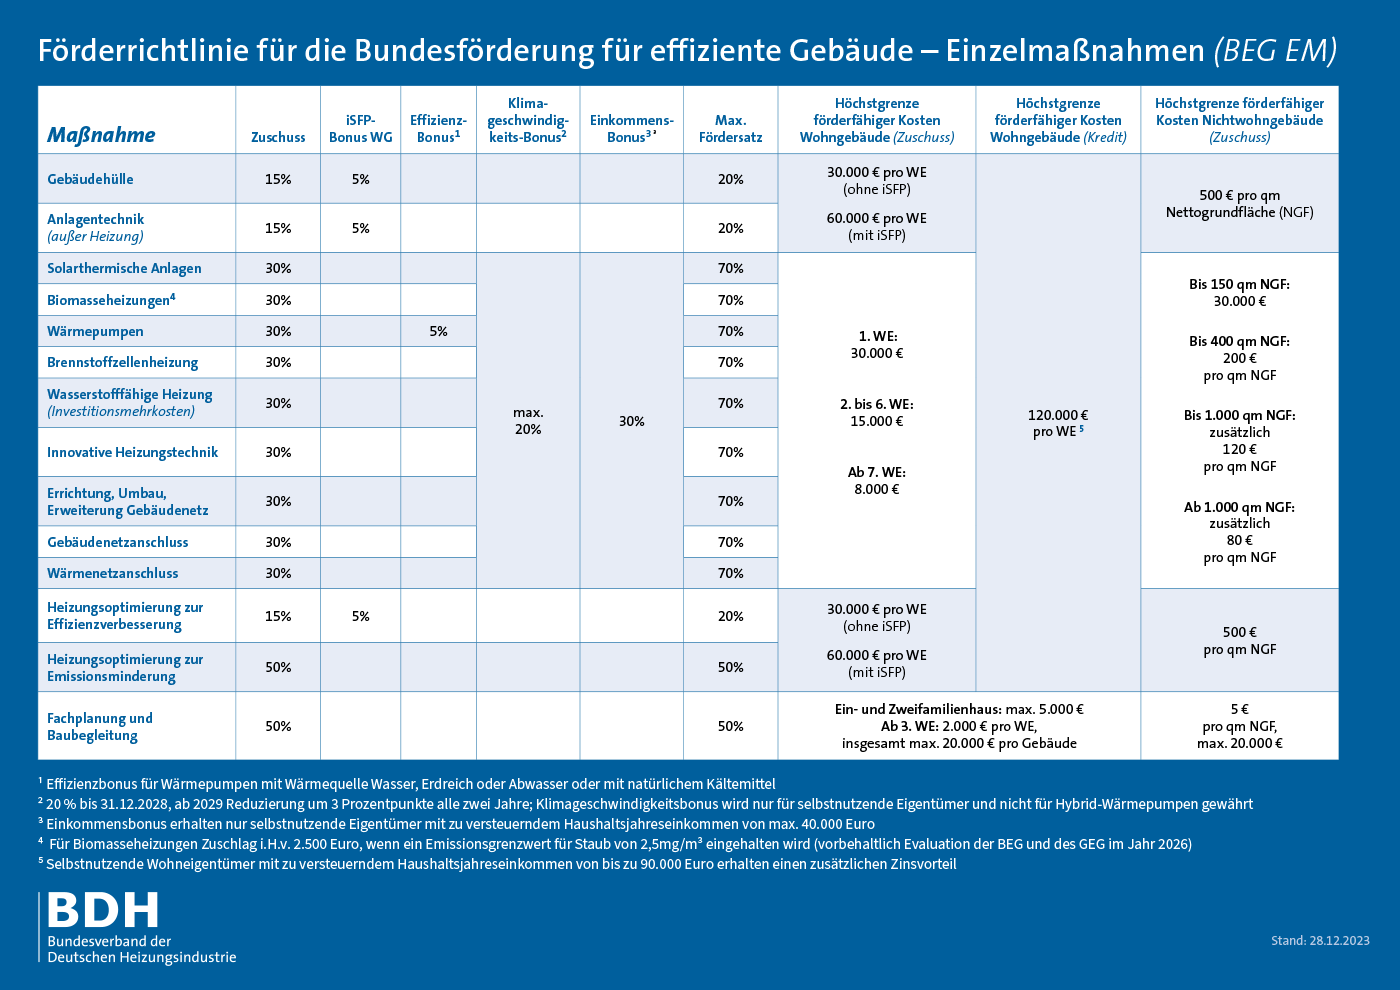 Download funding overview (in German)